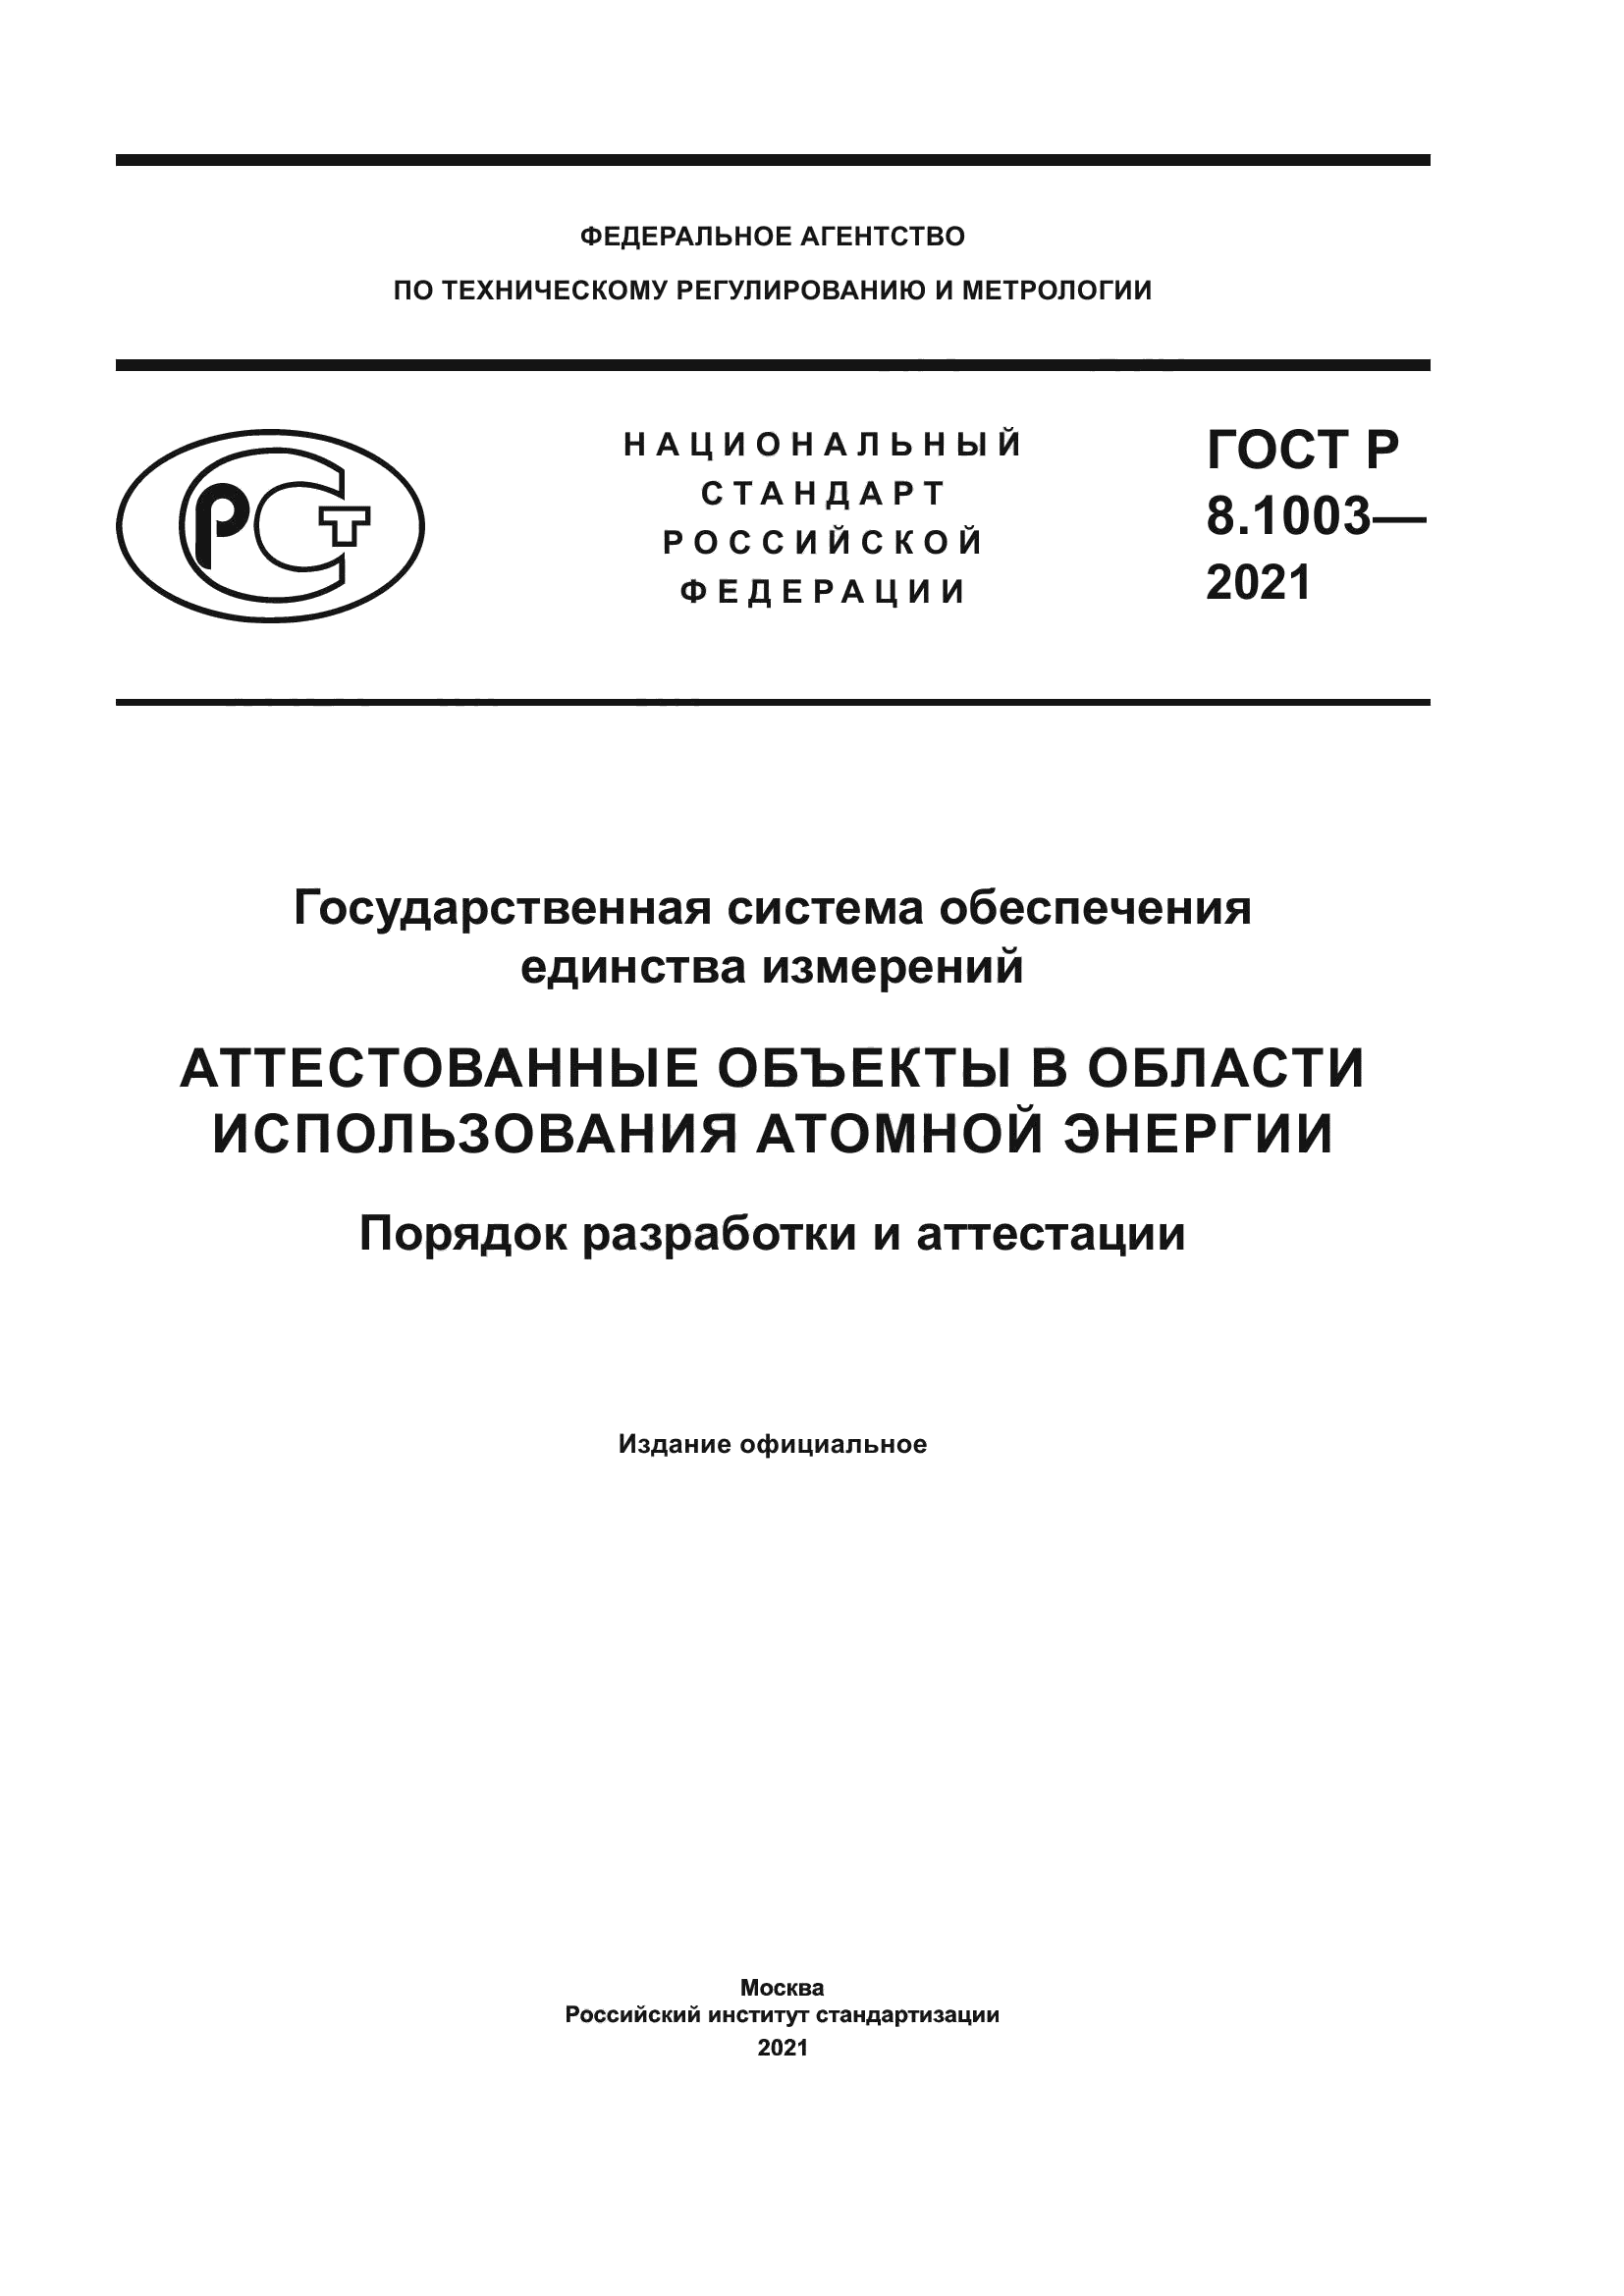 ГОСТ Р 8.1003-2021